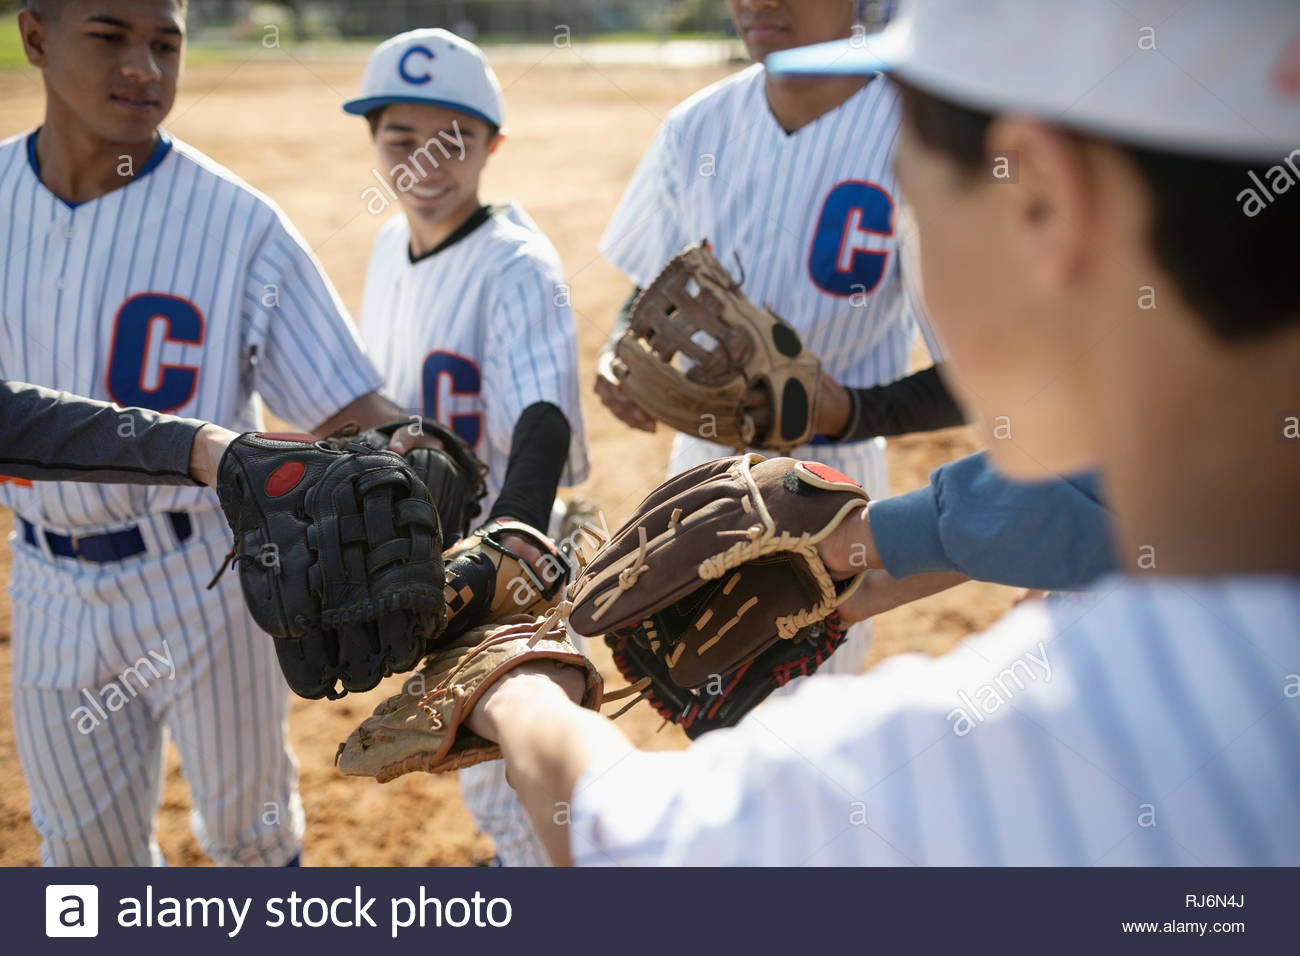 Baseball Spieler beitreten Baseball Handschuhe in Unordnung Stockfoto